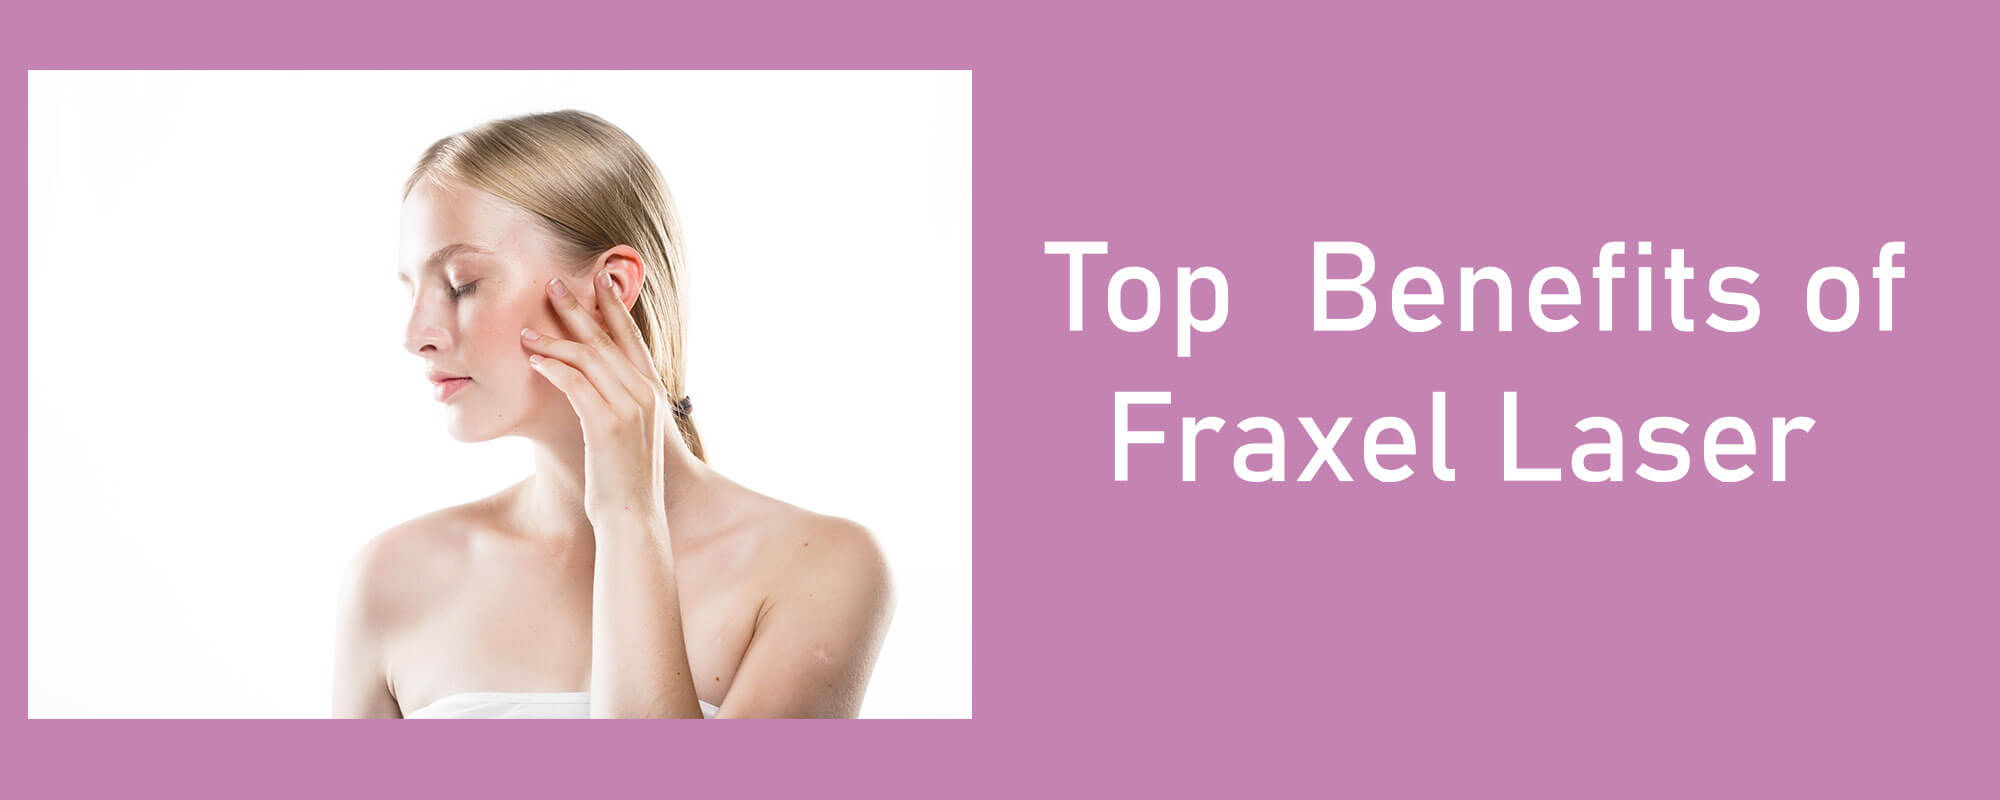 Top Benefits of Fraxel Laser - 1